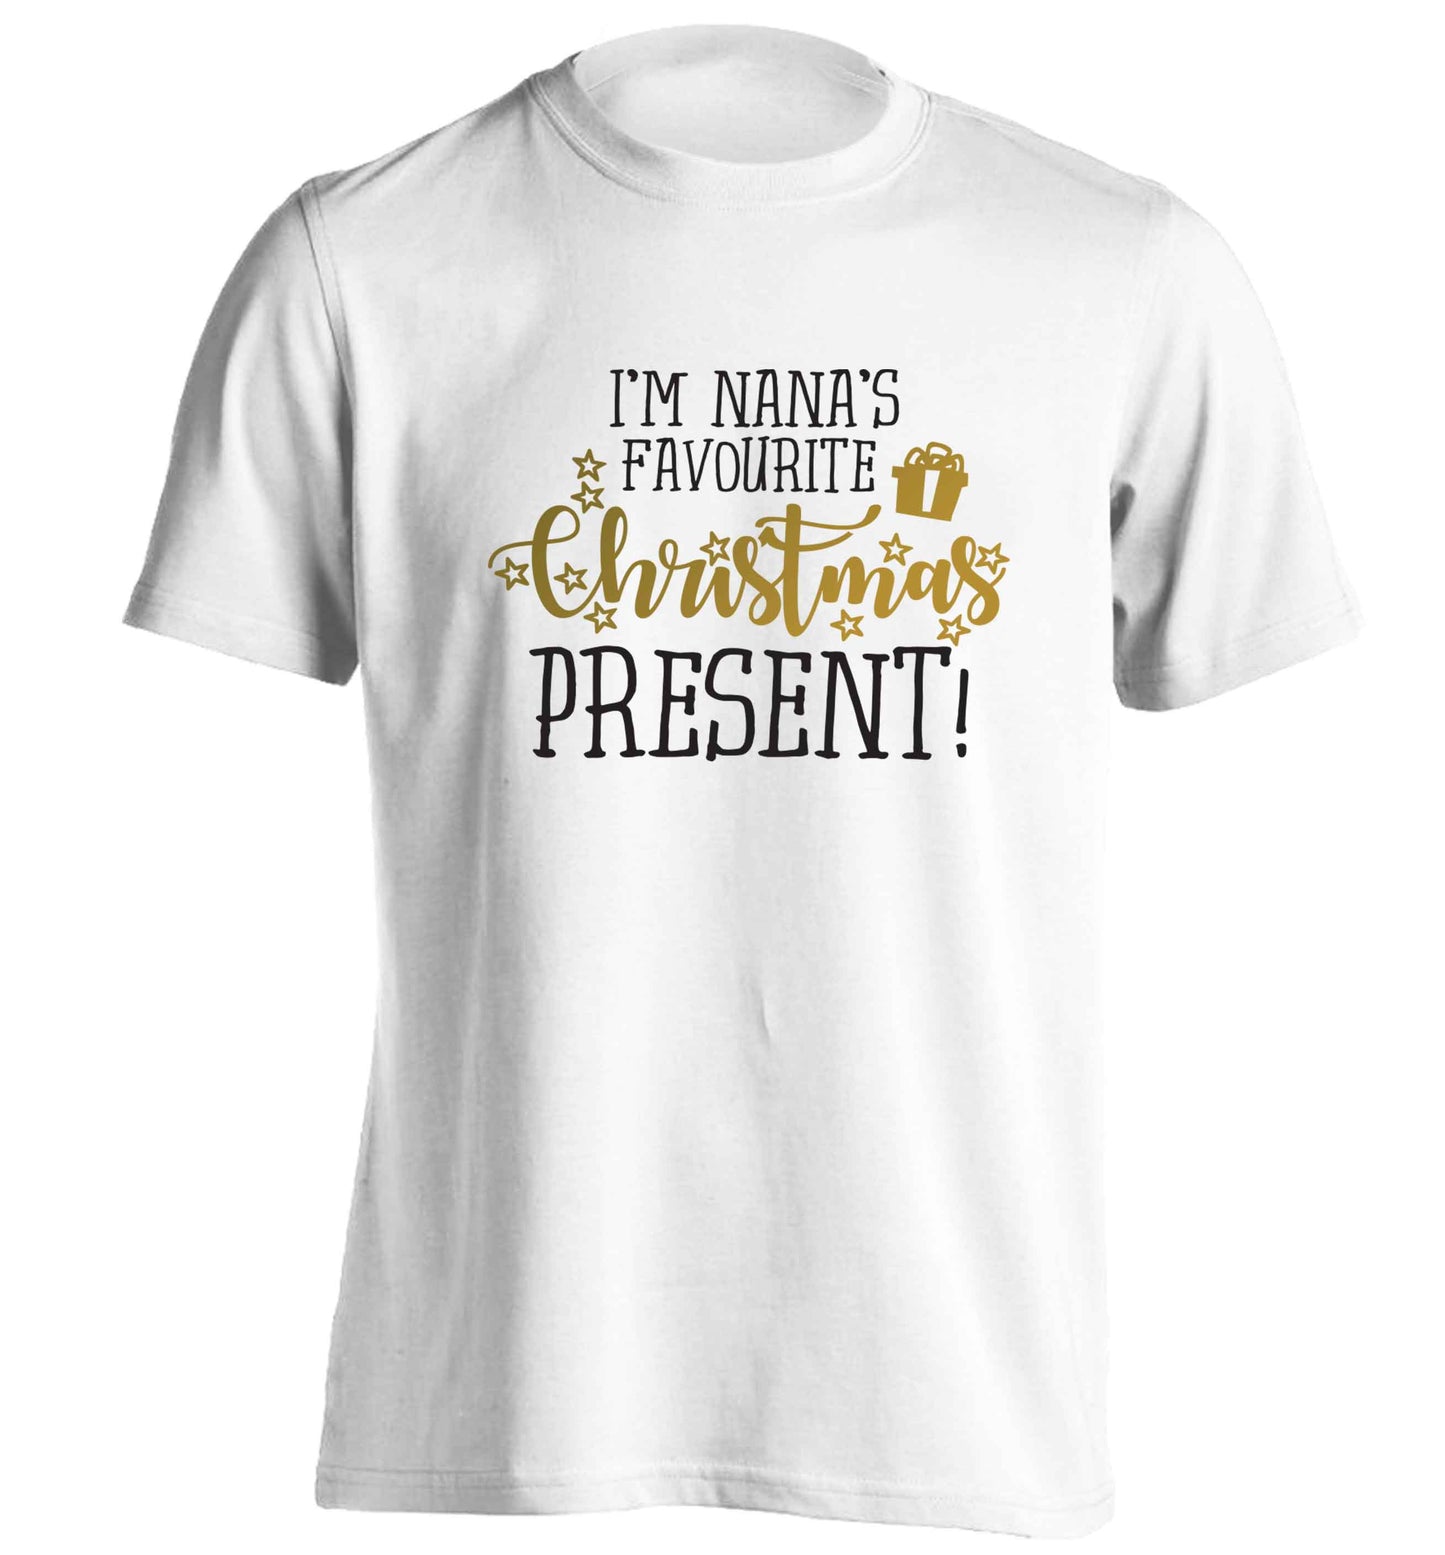 Nana's favourite Christmas present adults unisex white Tshirt 2XL